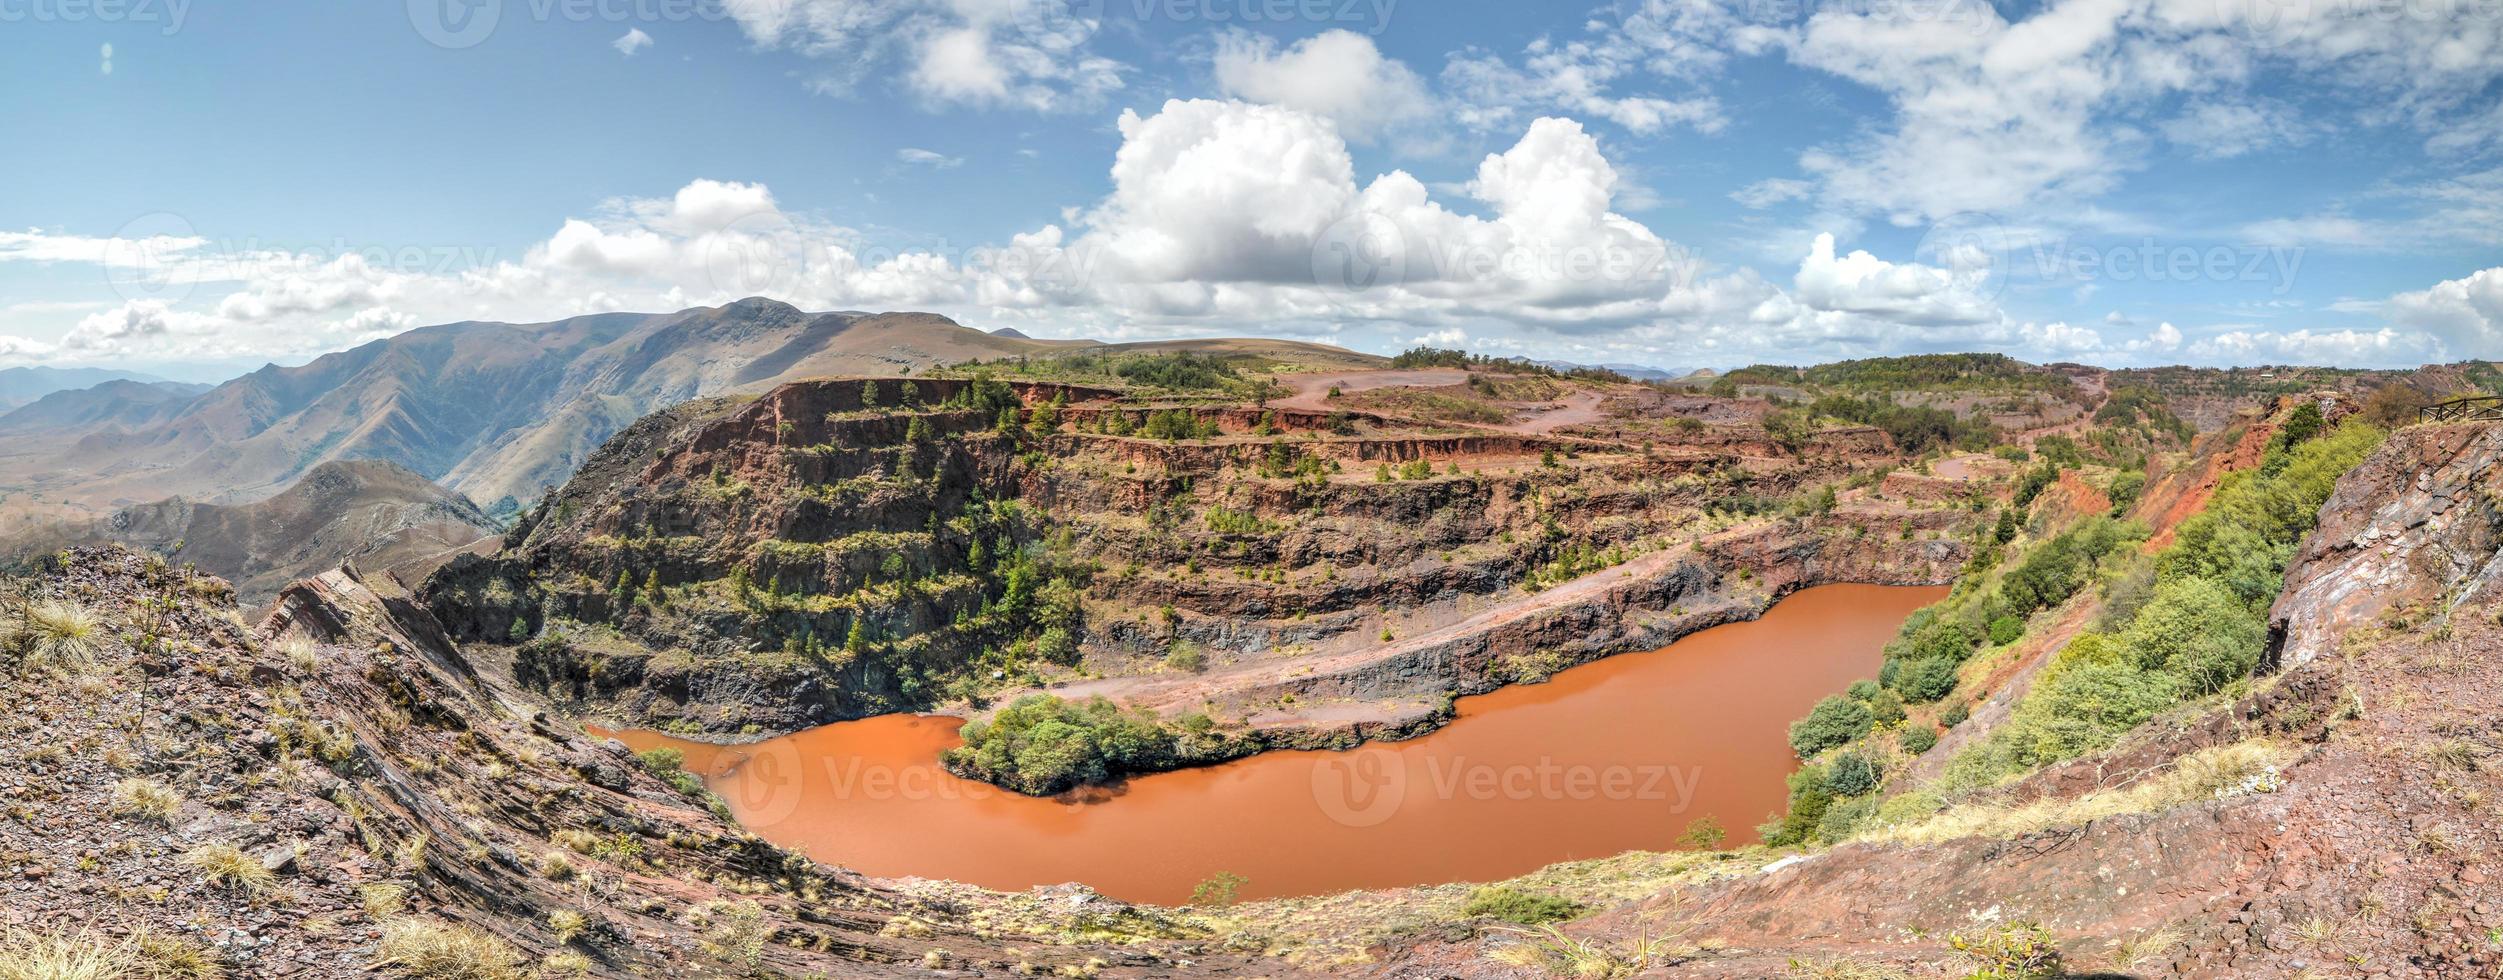 mina de minério de ferro ngwenya - suazilândia foto